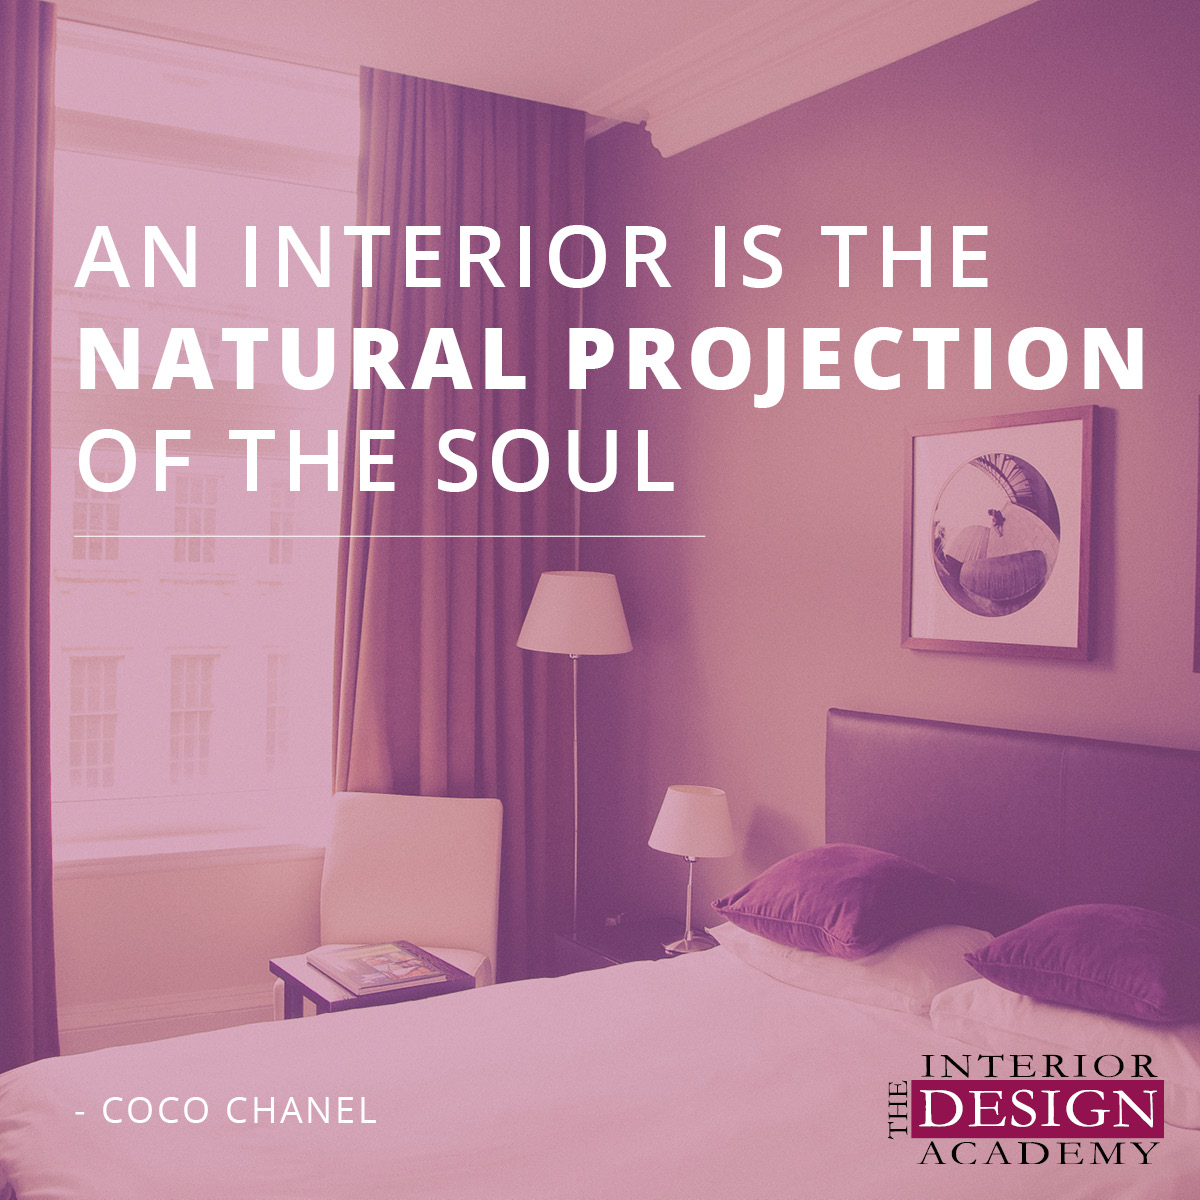 Coco Chanel on Interiors